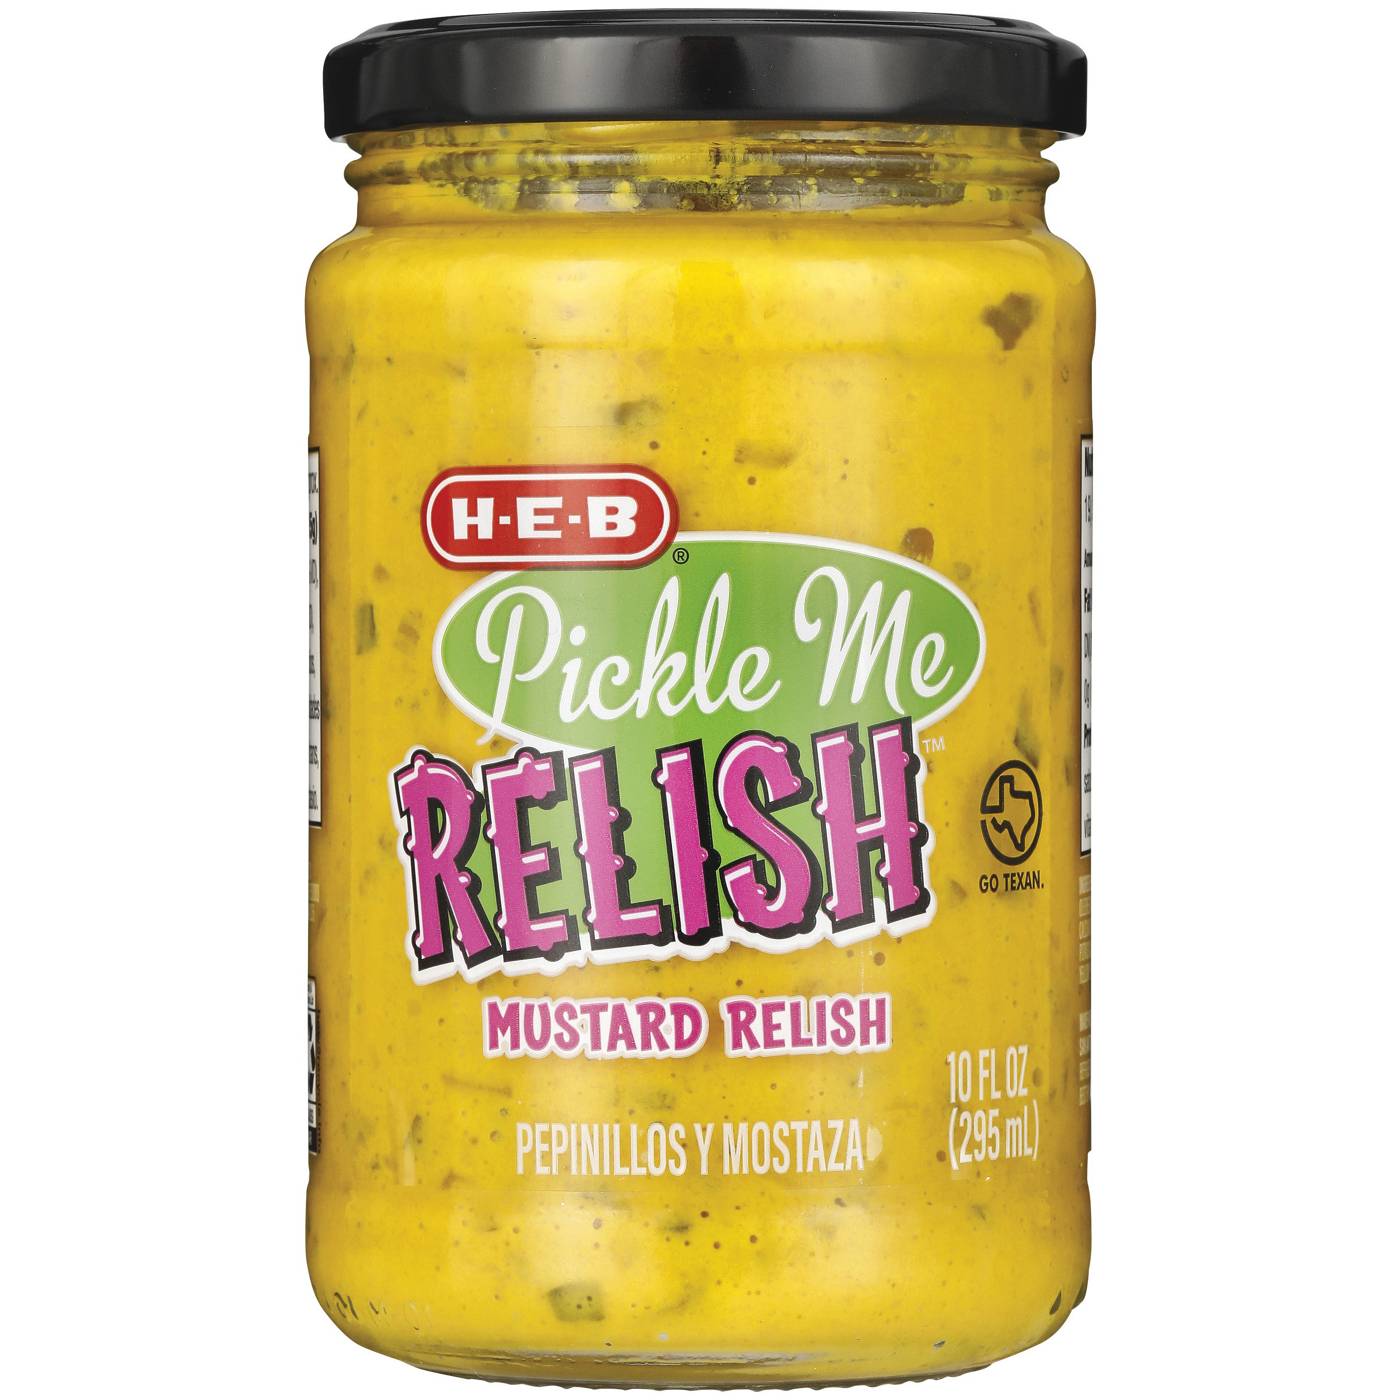 H-E-B Pickle Me Relish Mustard Relish; image 1 of 2